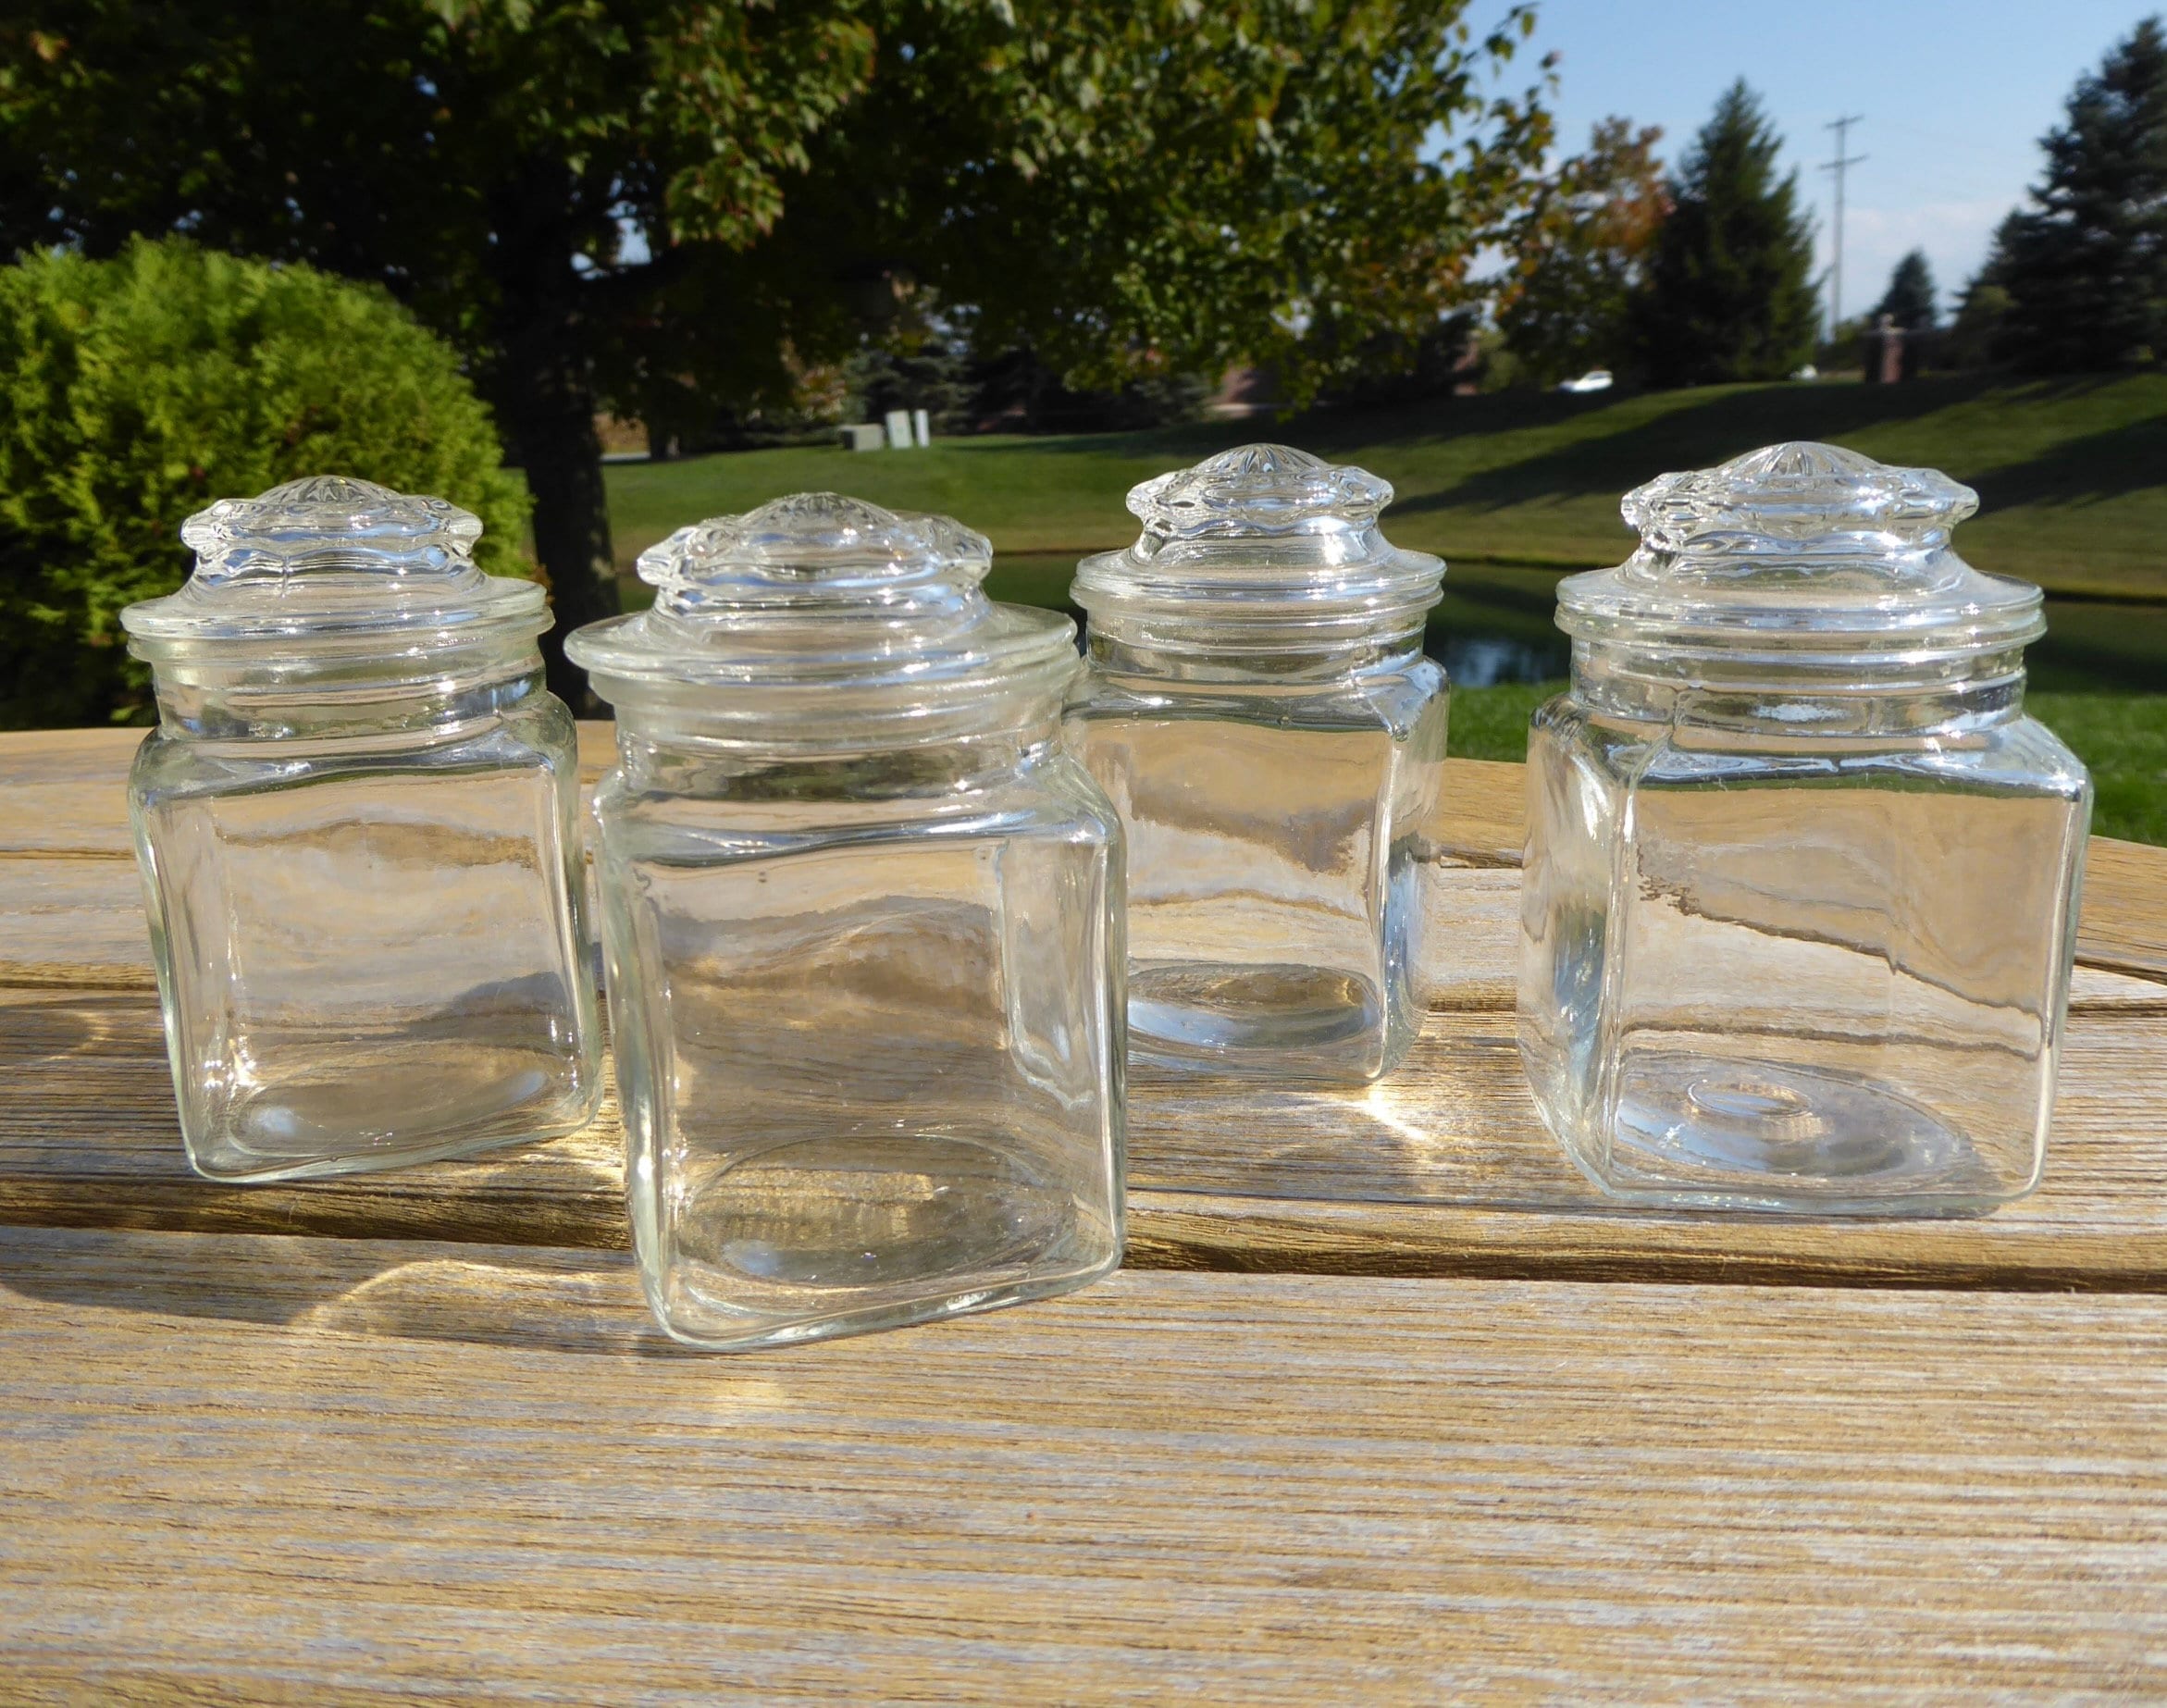 Dollar Tree Ribbed Glass Jars with Glass Lids, 24 oz.